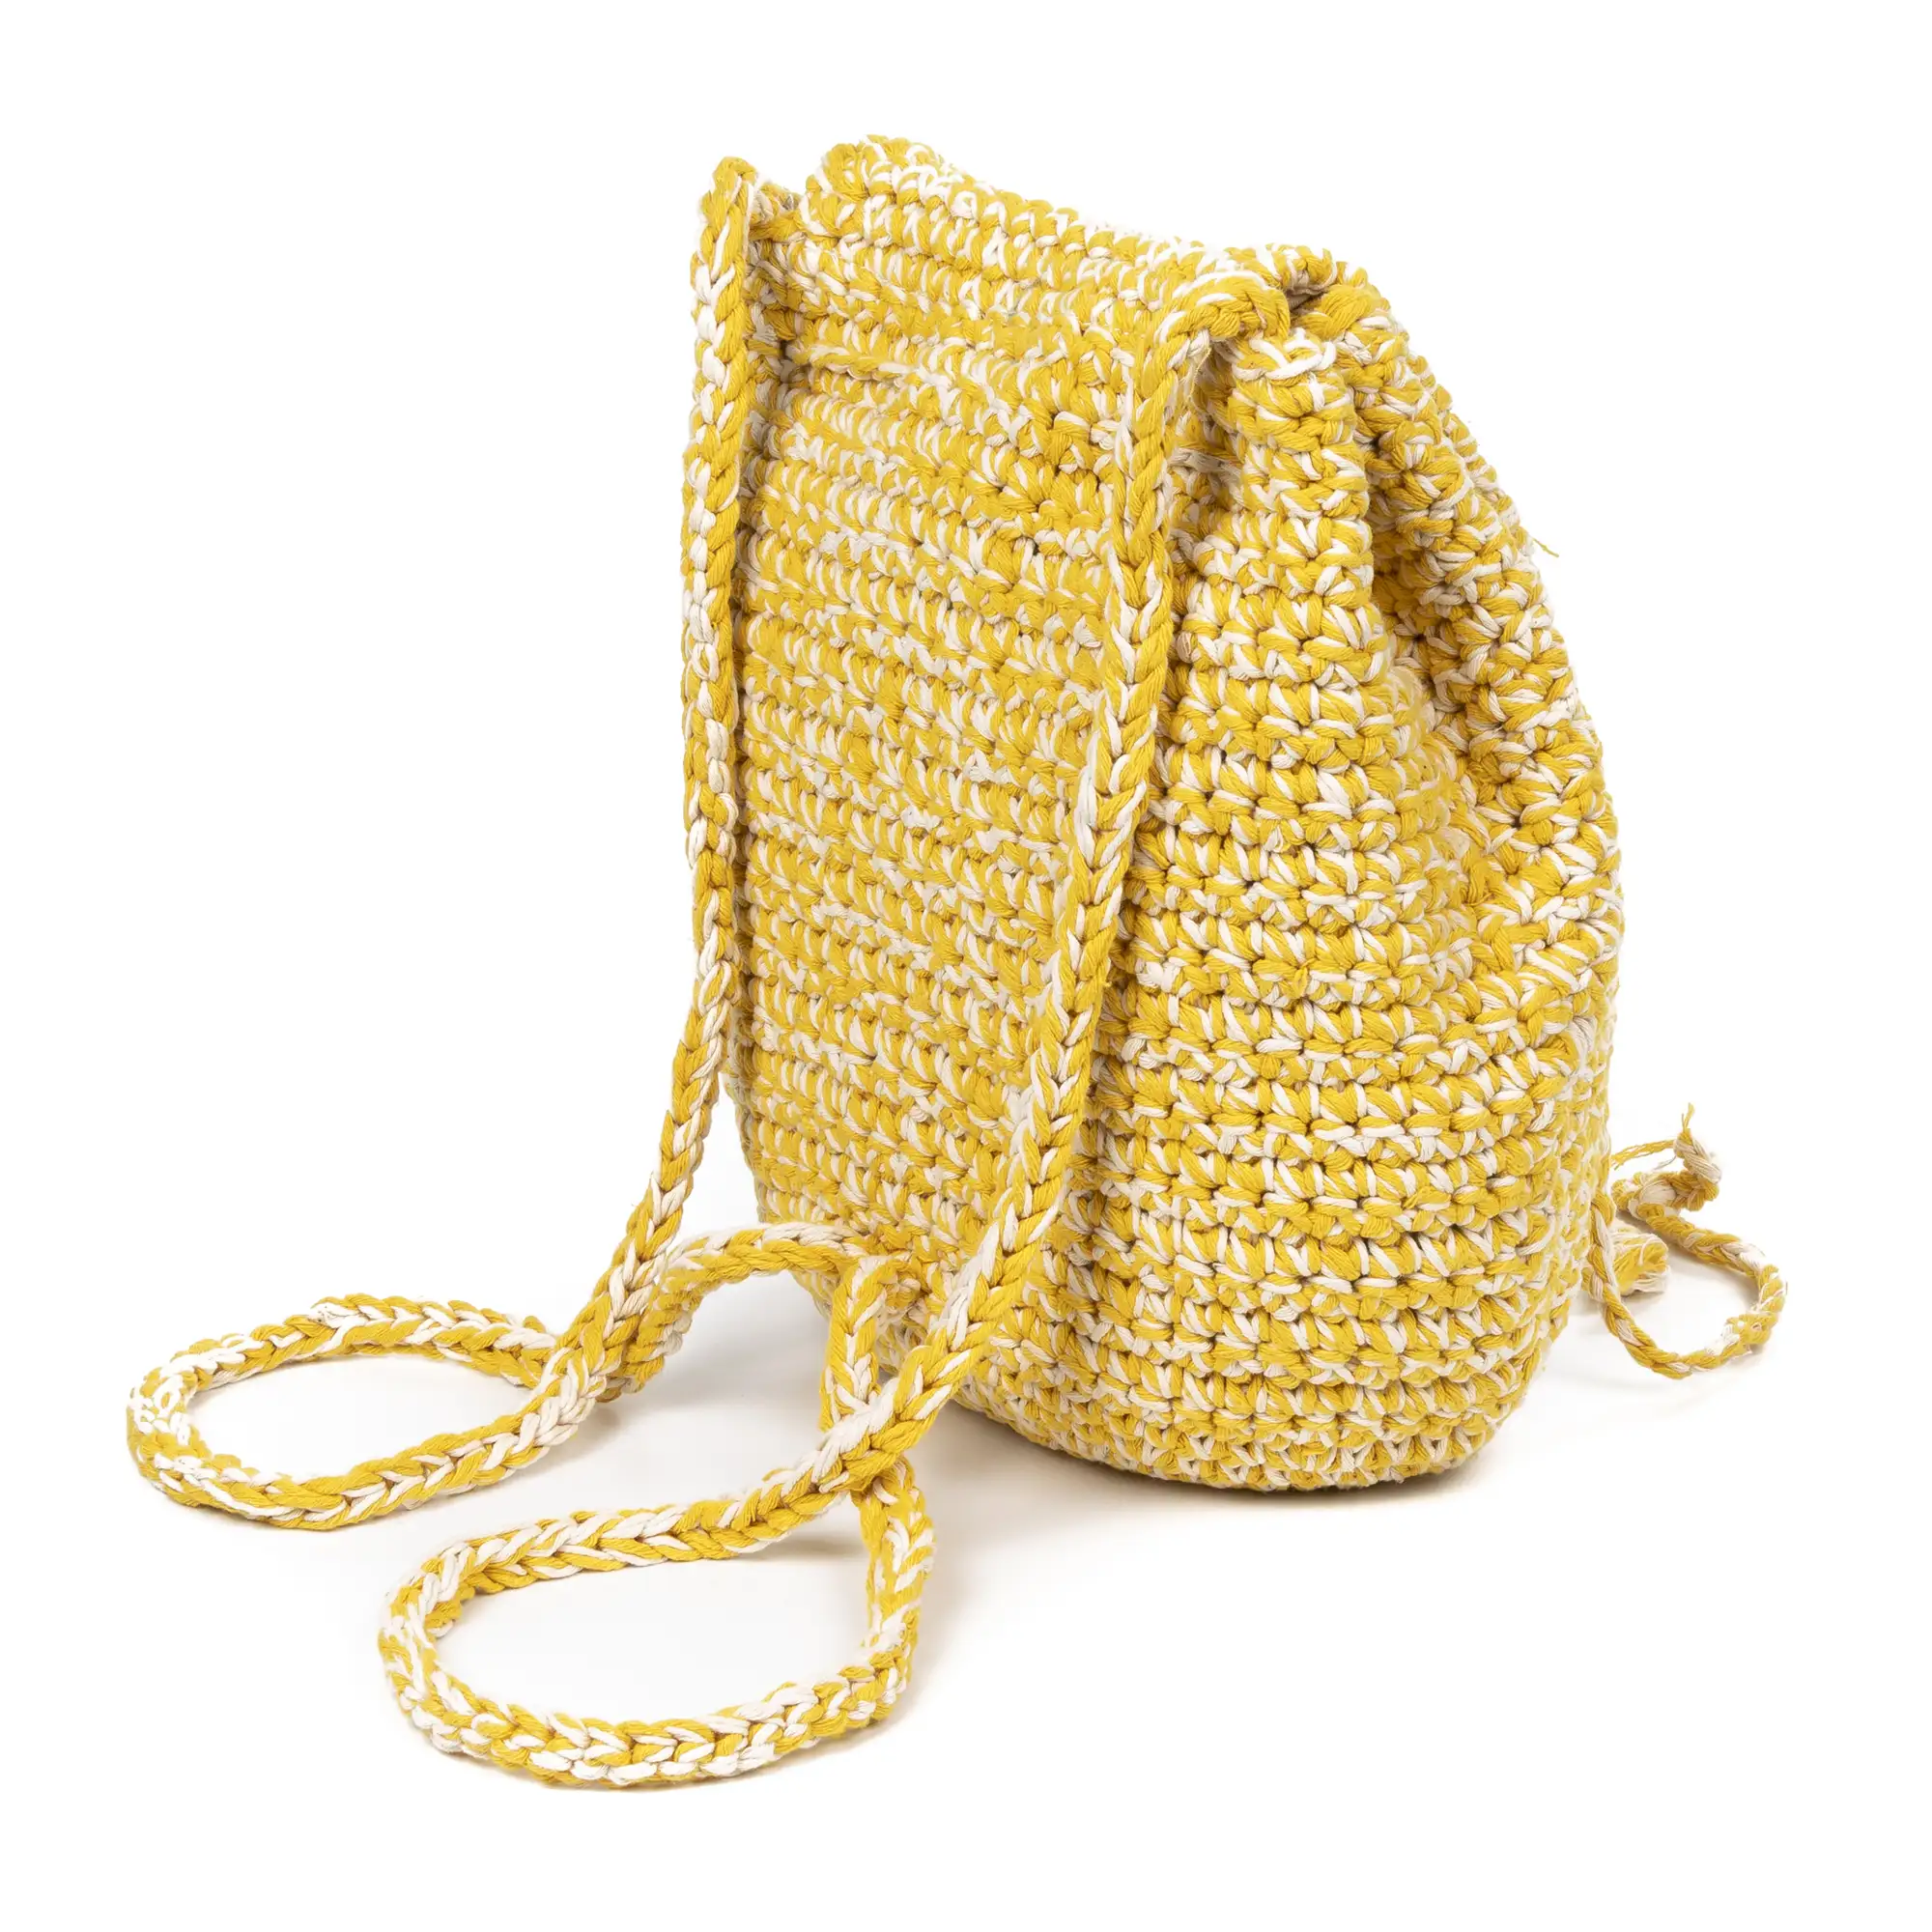 Laura Bolso mochila Mujer. Tejido Algodón Crochet